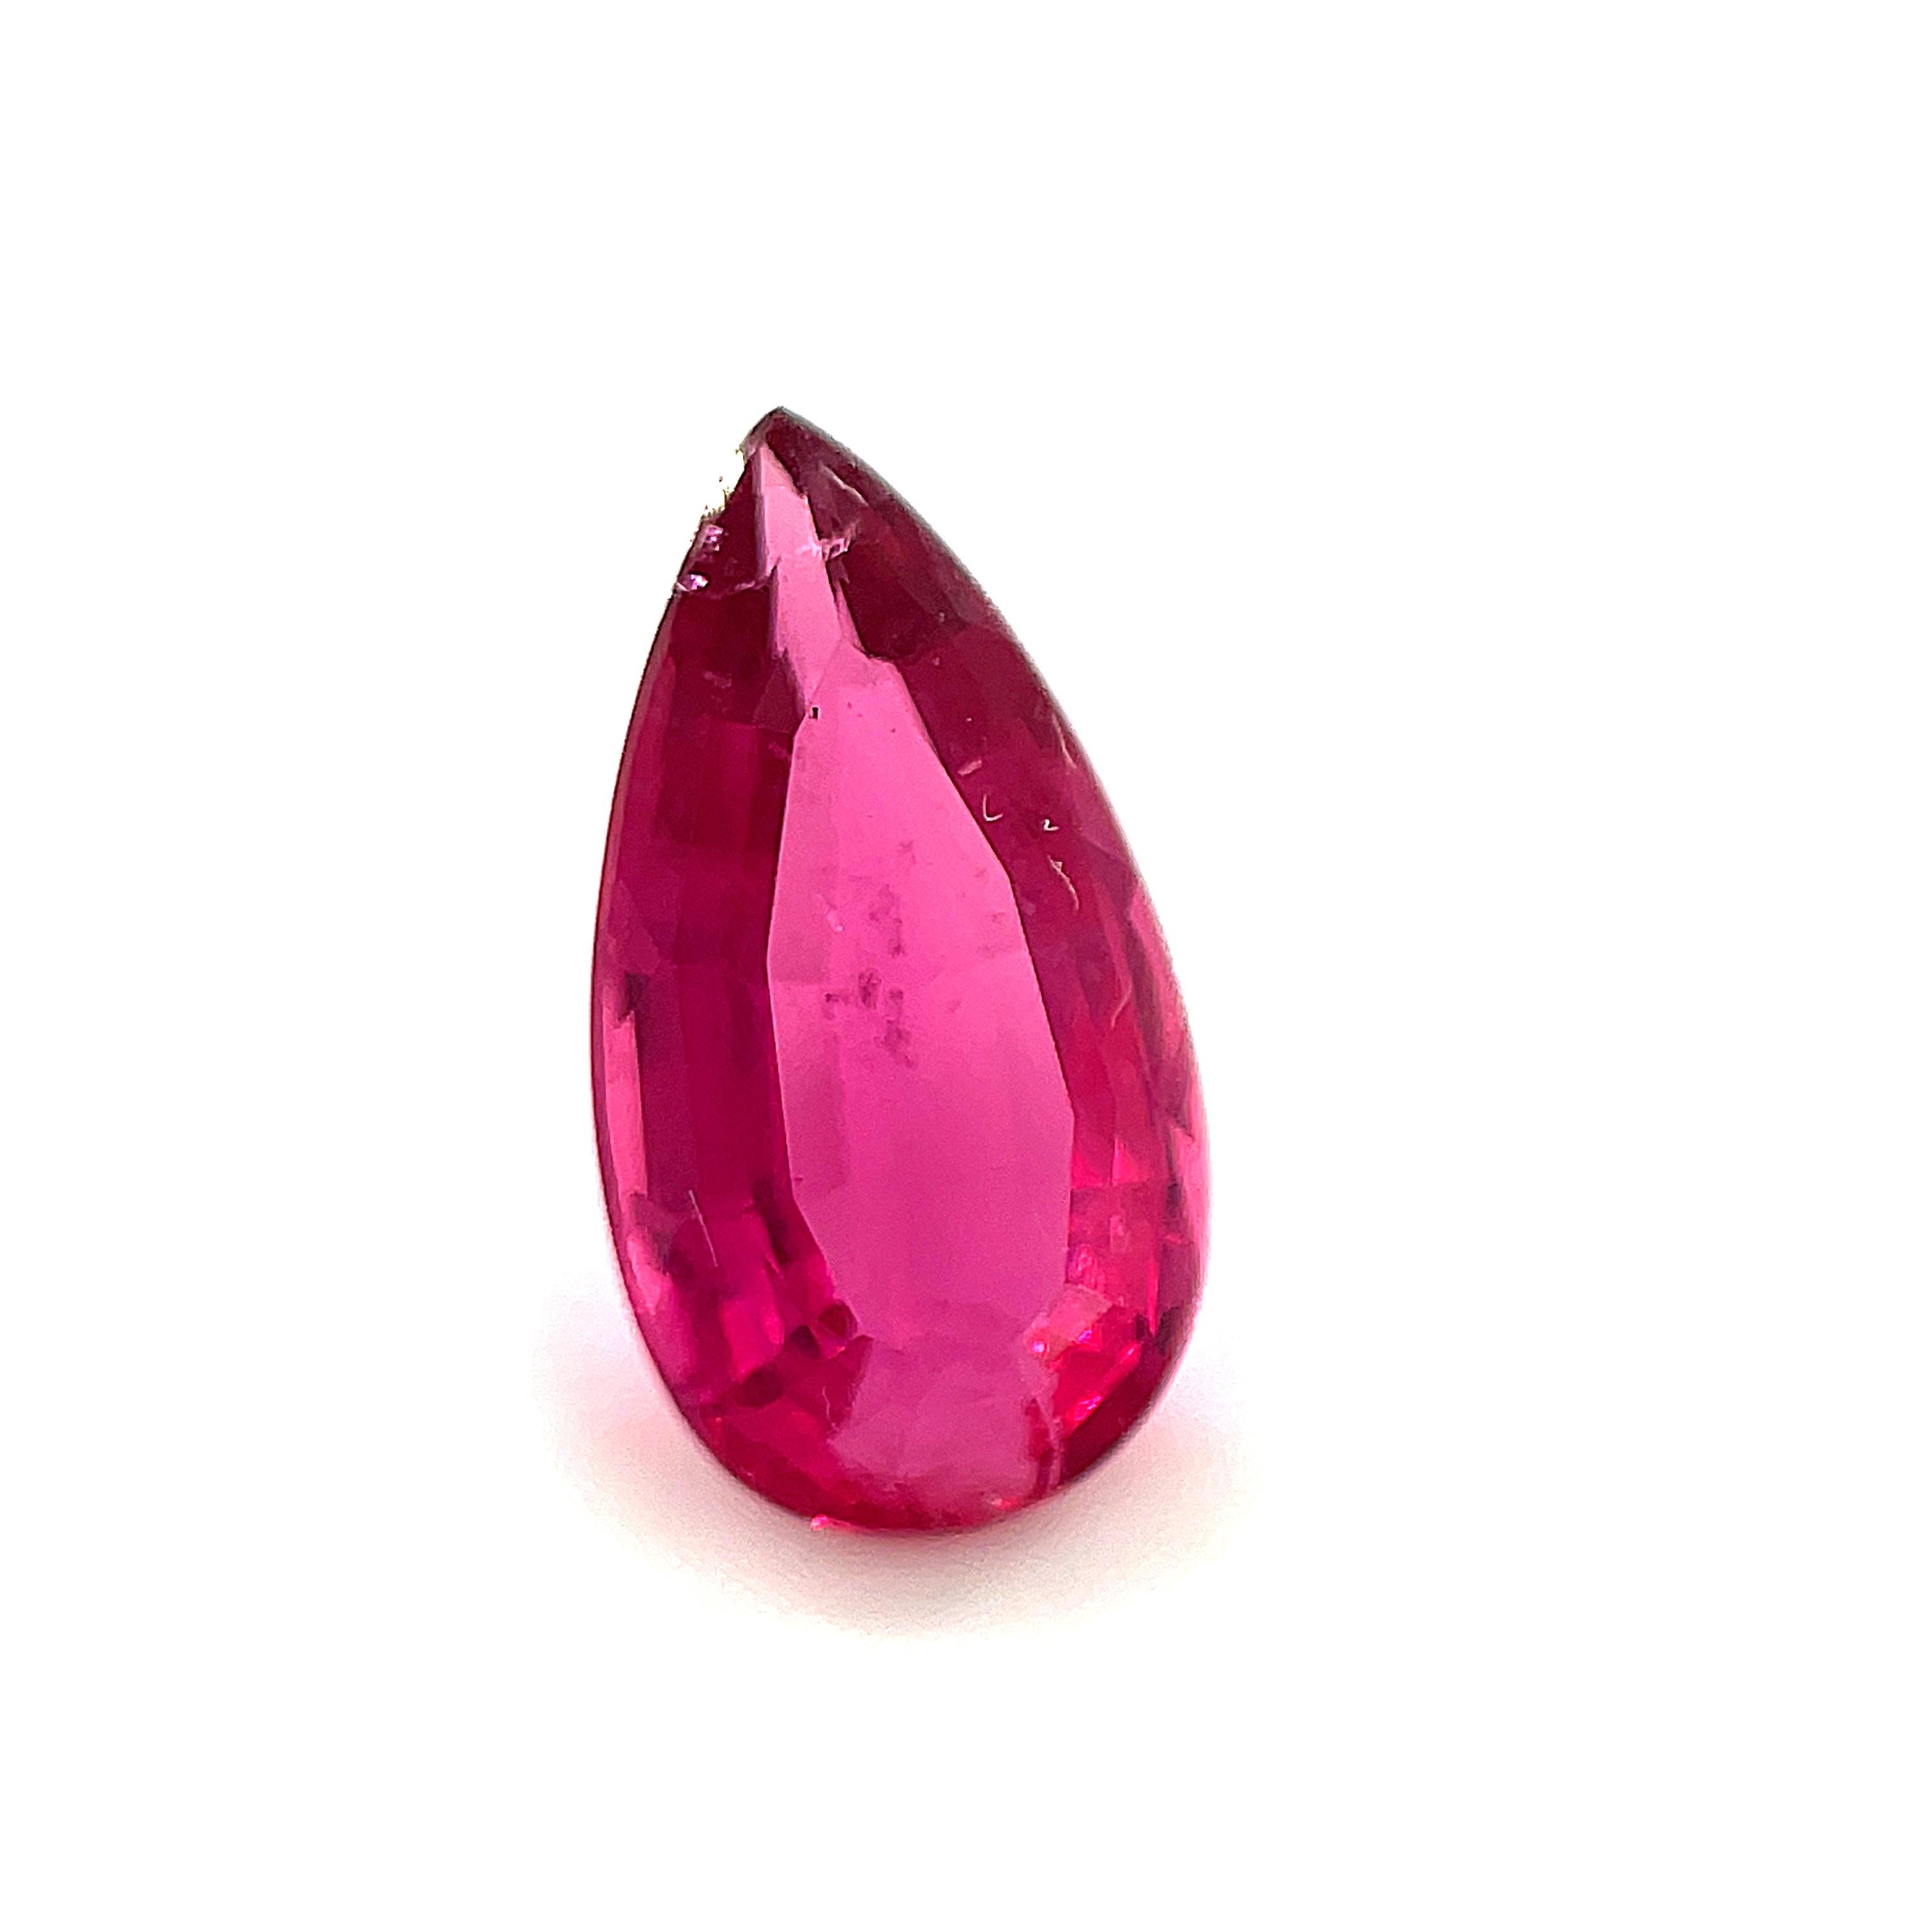 Women's 2.70 Carat Elongated Pear Shape Rubellite Tourmaline, Unset Loose Gemstone For Sale